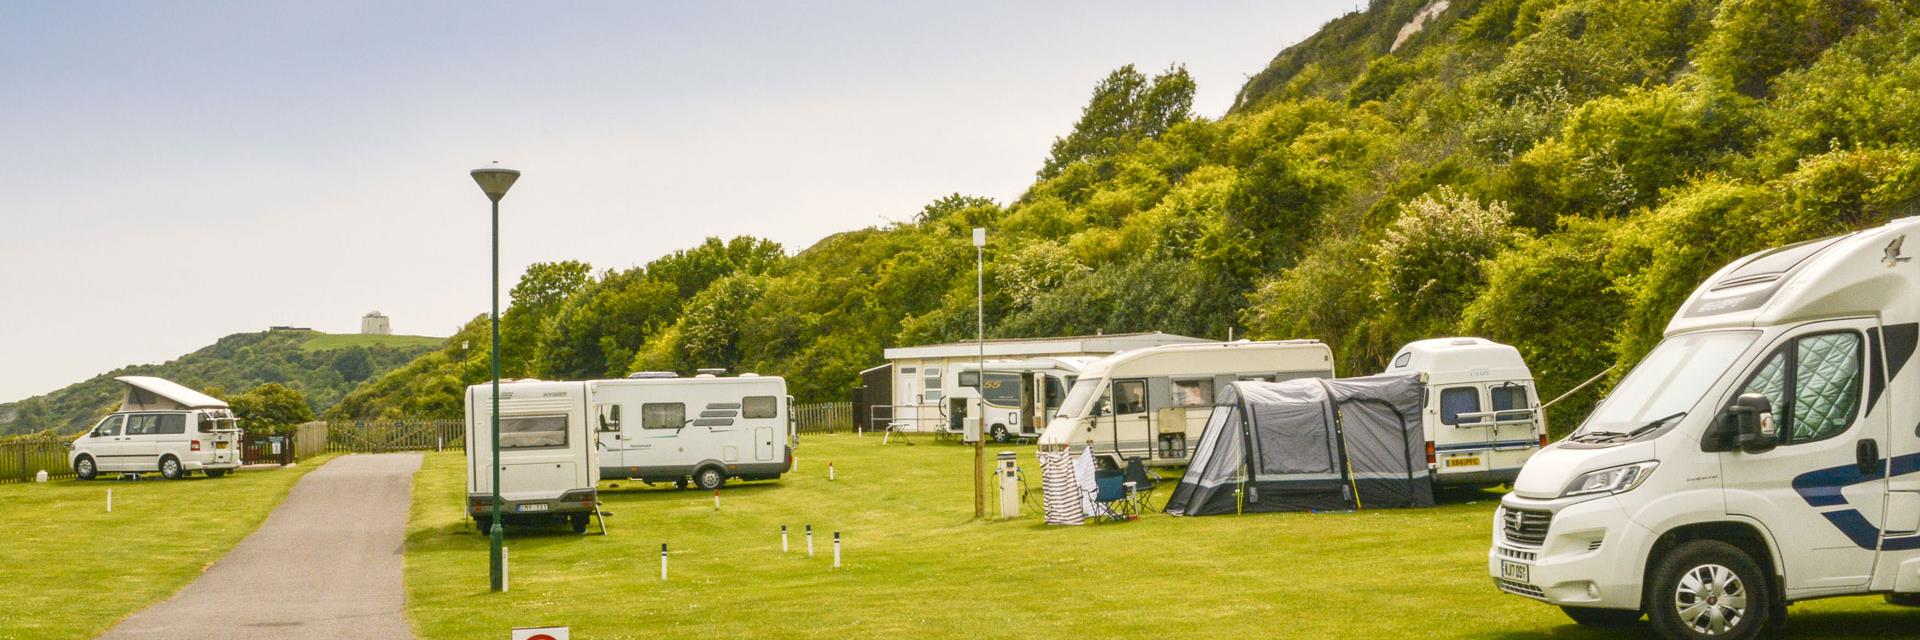 https://www.campingandcaravanningclub.co.uk/-/media/Images/Campsites/Club-Sites/Folkestone/Folkestone-campsite-page-5b.jpg?rev=43e1b3a4f85e466d8ff2e45c7c6d8cce&w=2560&h=640